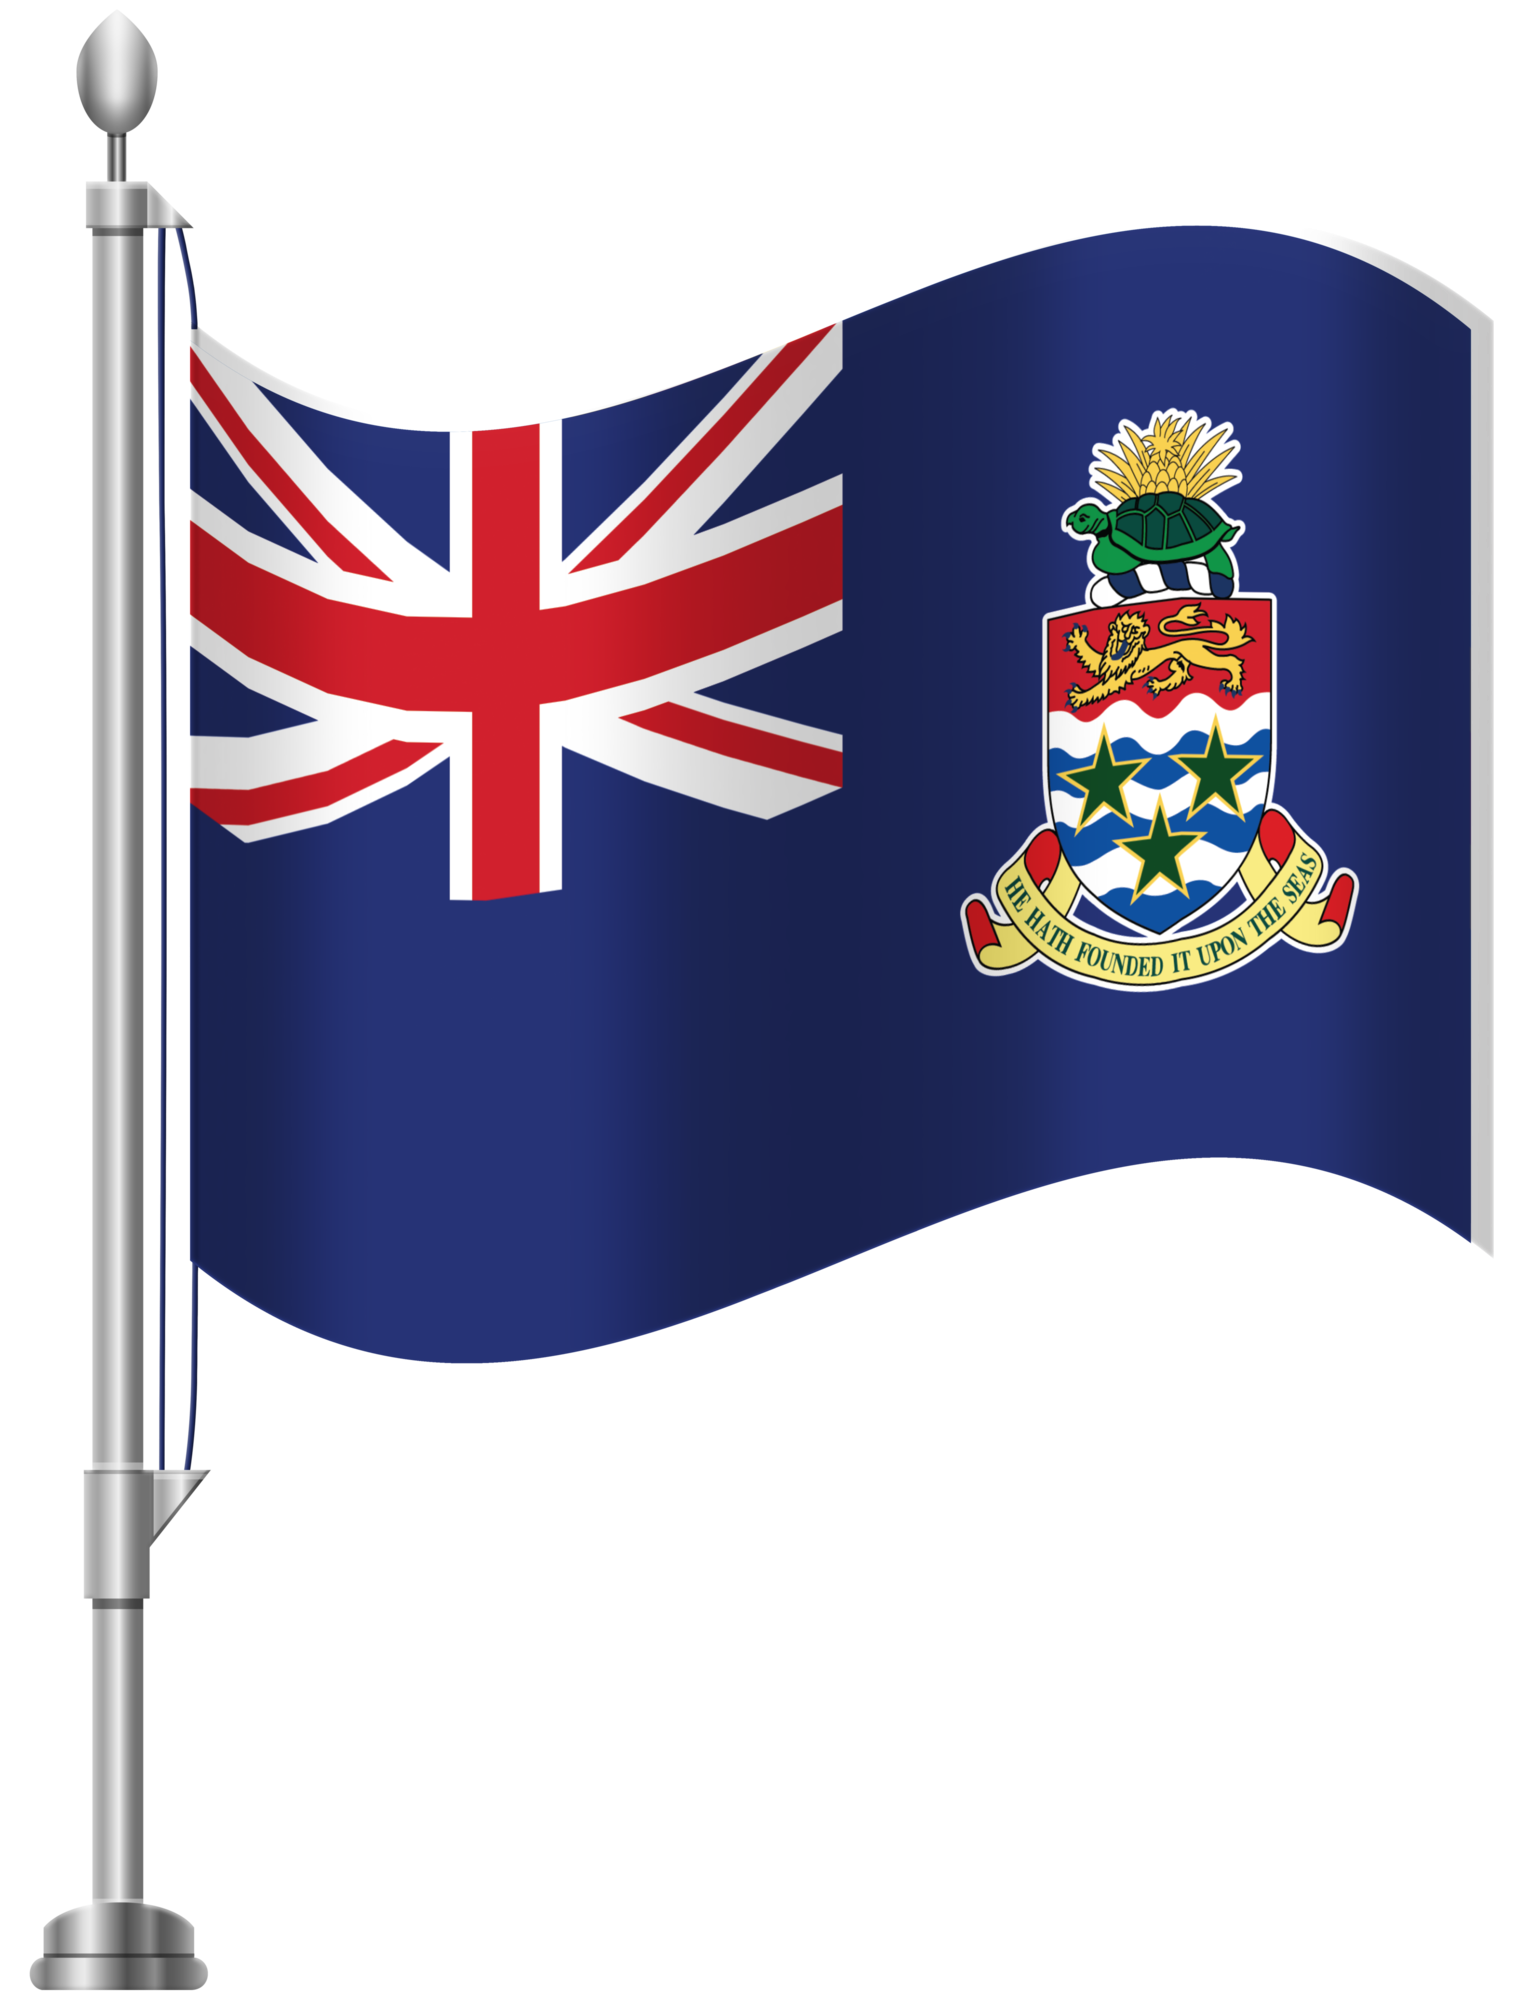 Island clipart island fiji. Cayman islands flag png